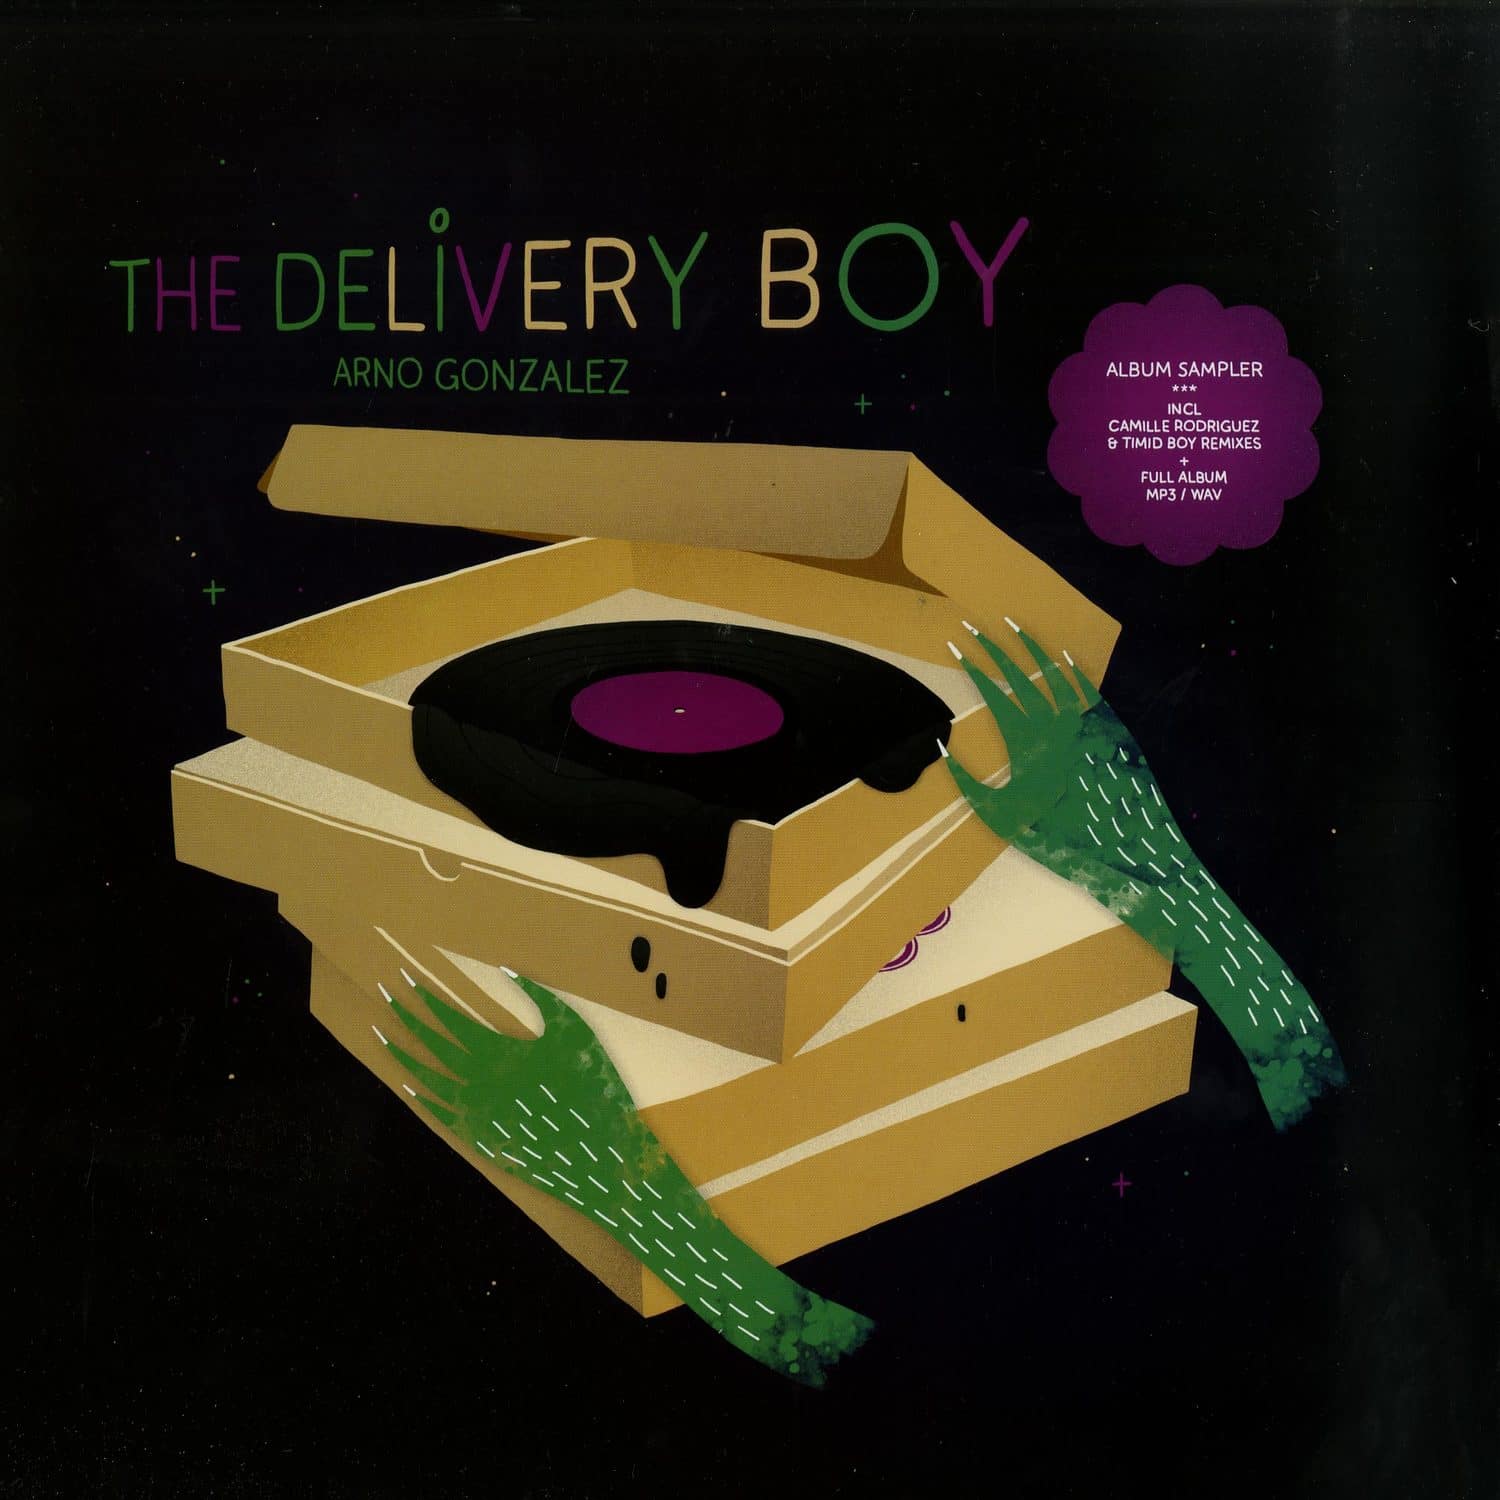 Arno Gonzalez - THE DELIVERY BOY - ALBUM SAMPLER